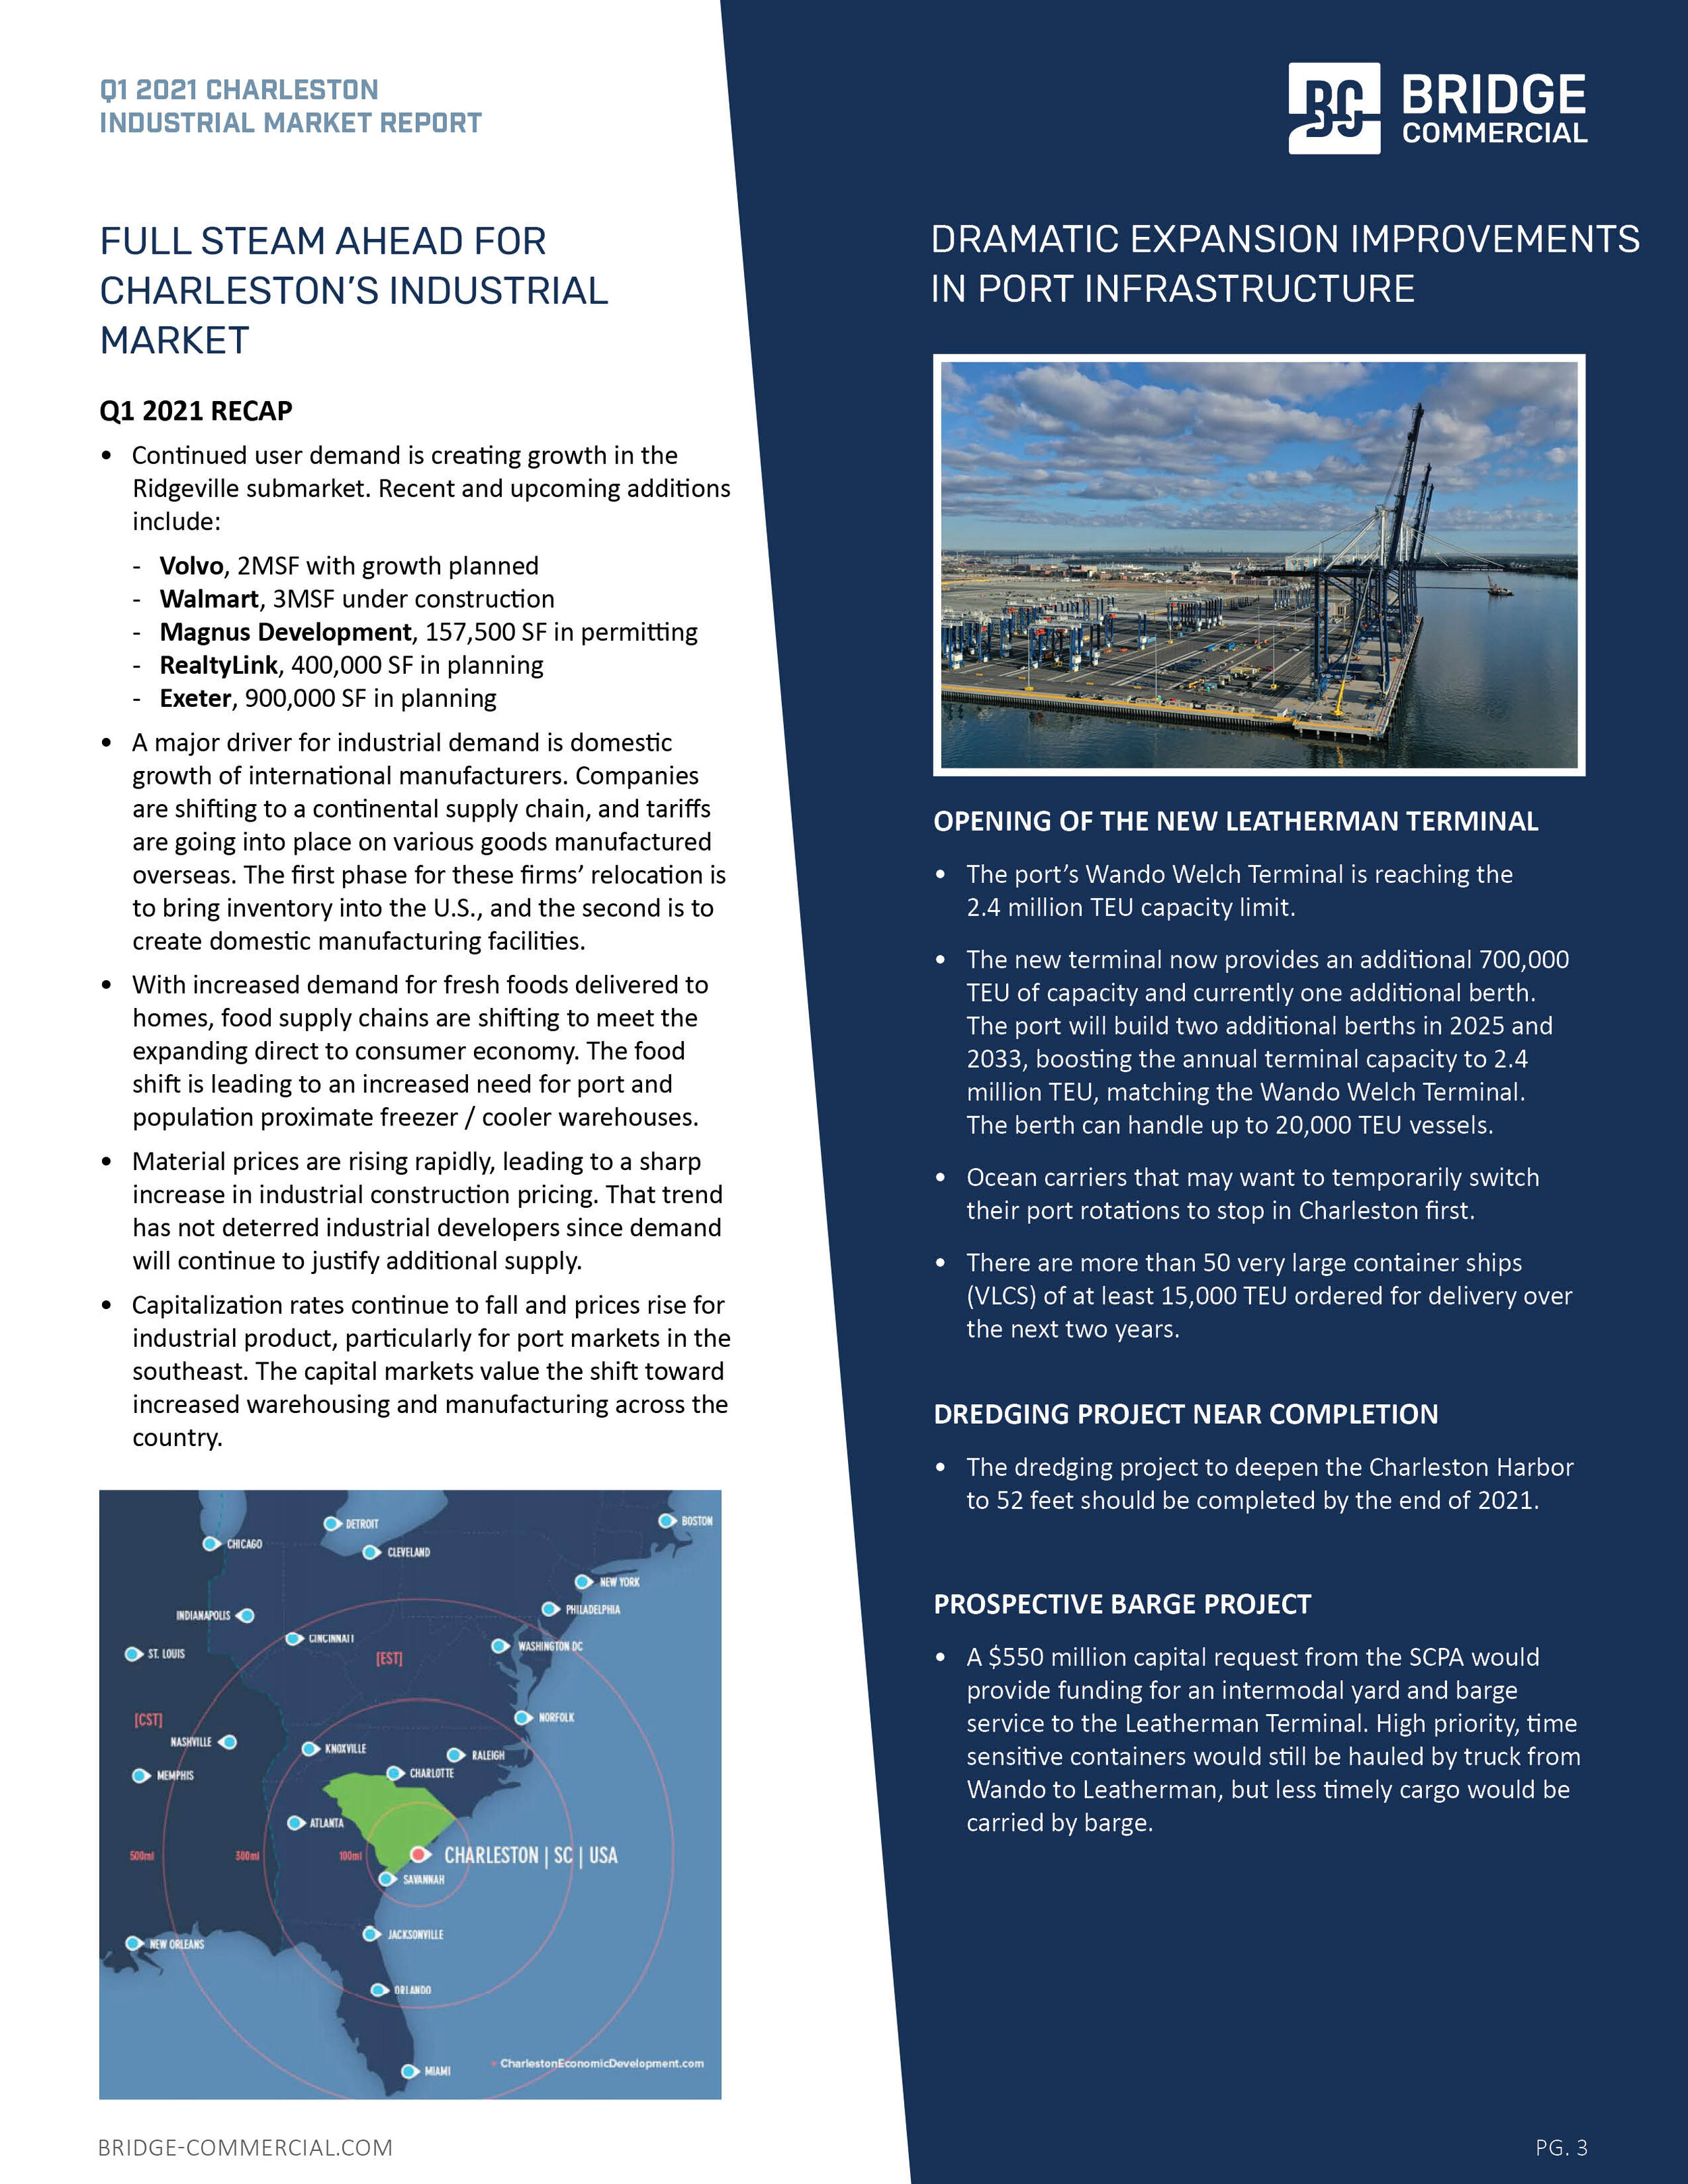 Q1 2021 Charleston Industrial Market Report_Bridge Commercial3.jpg